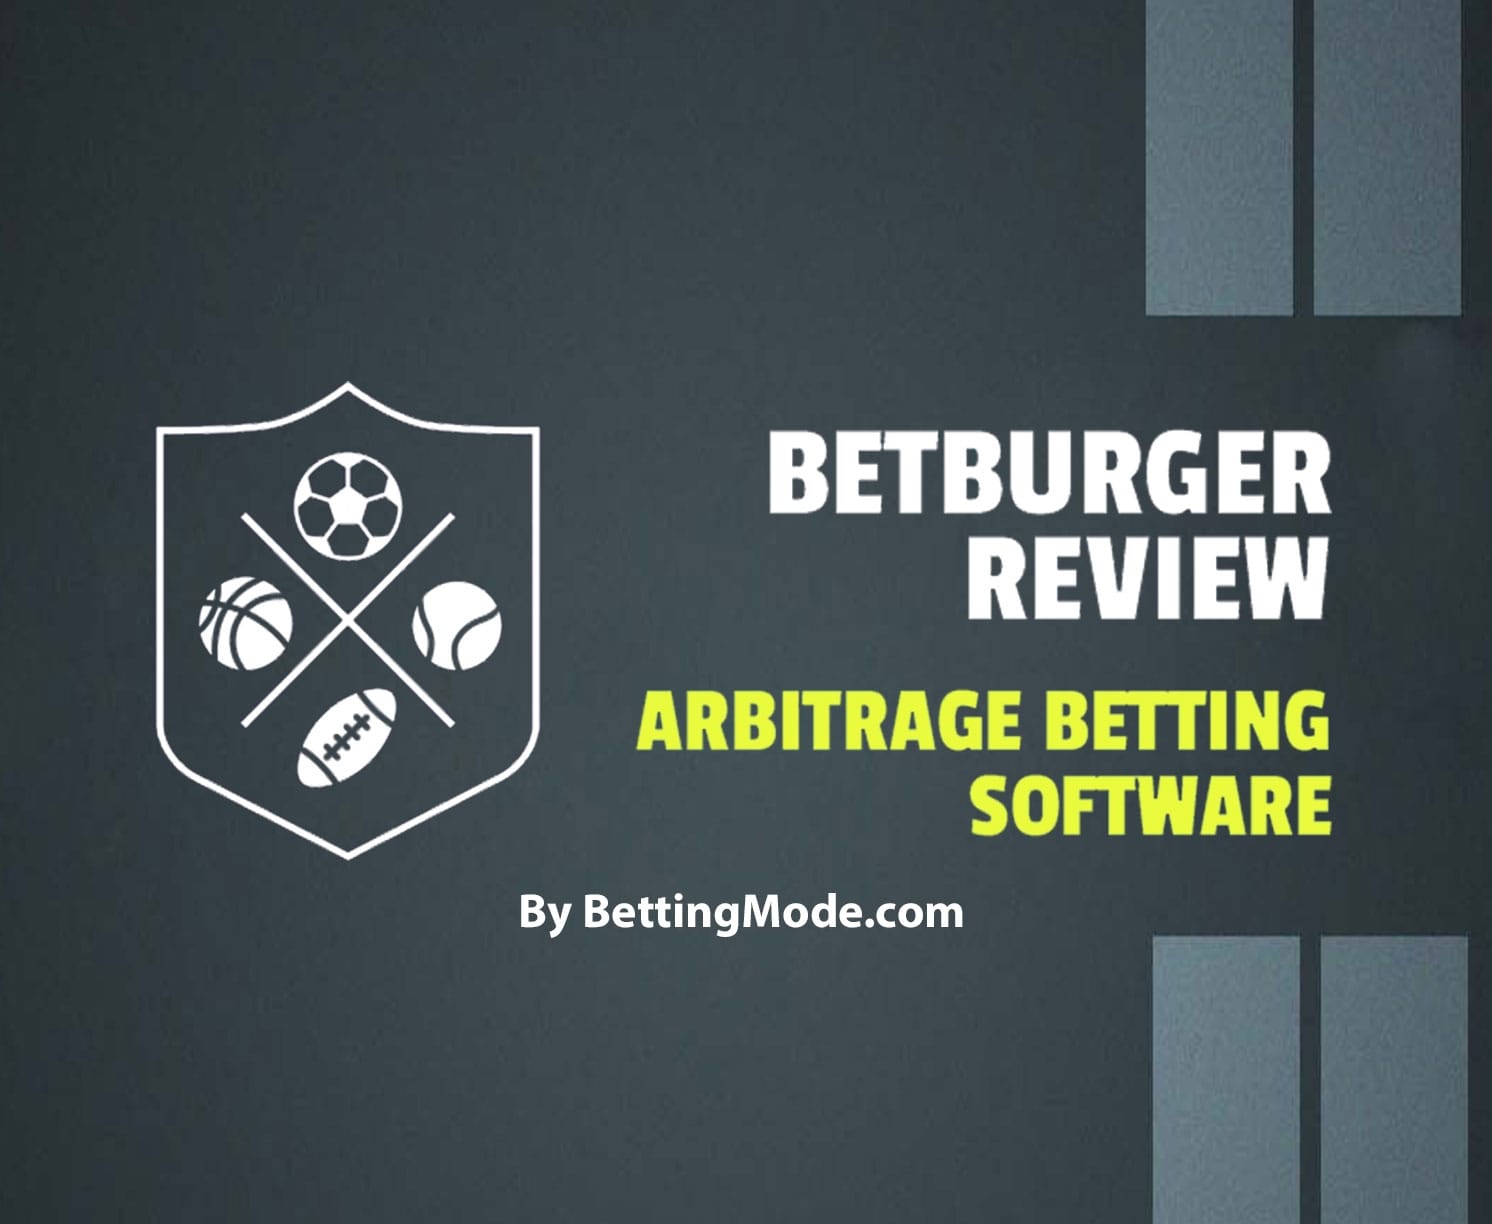 Betburger Review